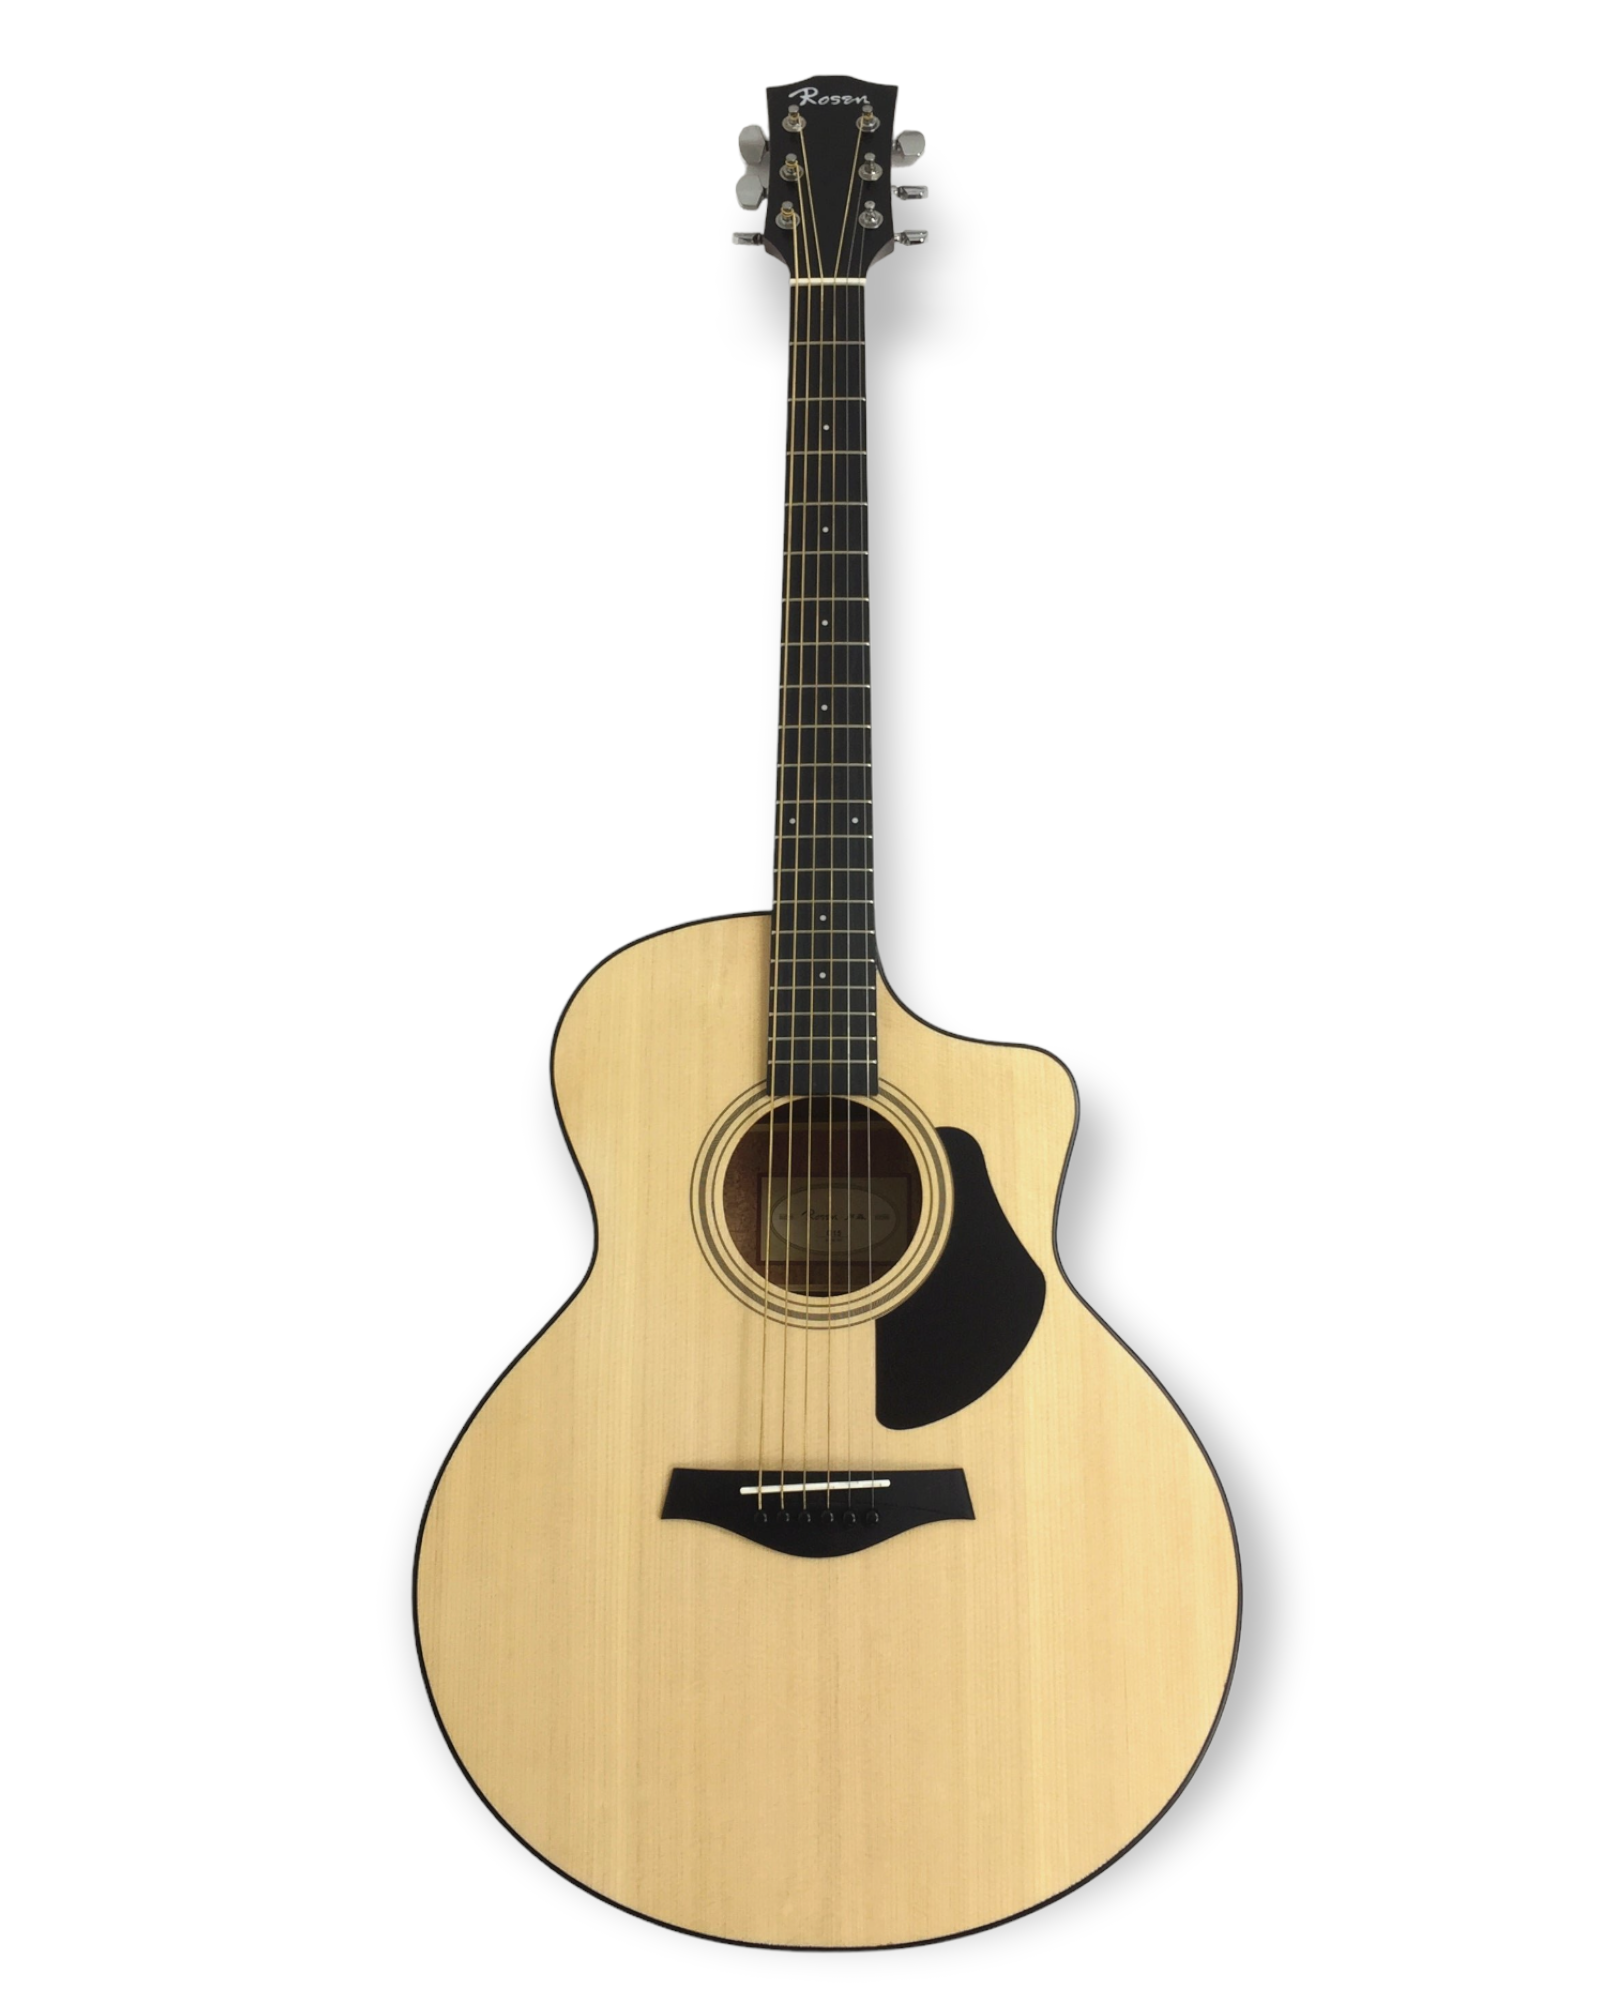 Rosen Solid Spruce Top Mahogany Neck OM Cutaway Acoustic Guitar - Natural G15JFCN